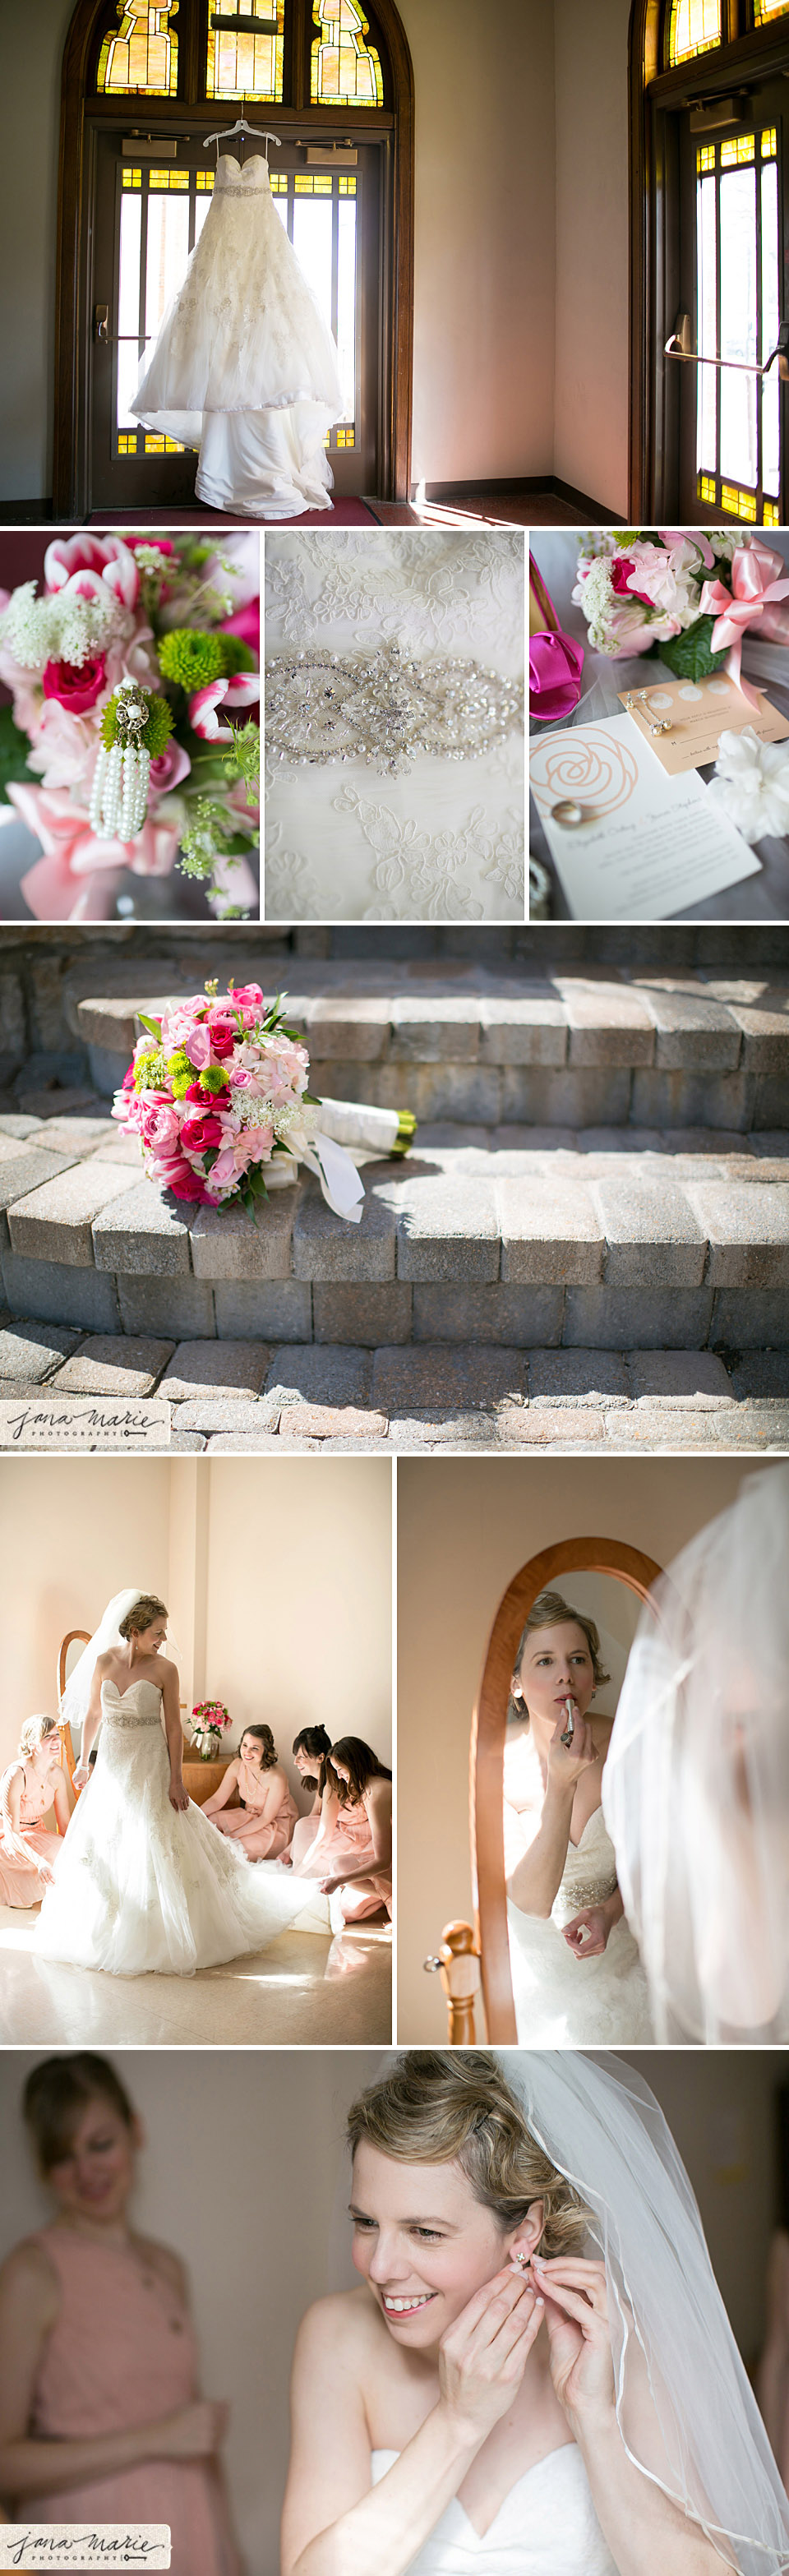 Emmanuel Lutheran Church, Westport wedding venues, Floral design, Jana Marie Photography, getting ready, wedding details